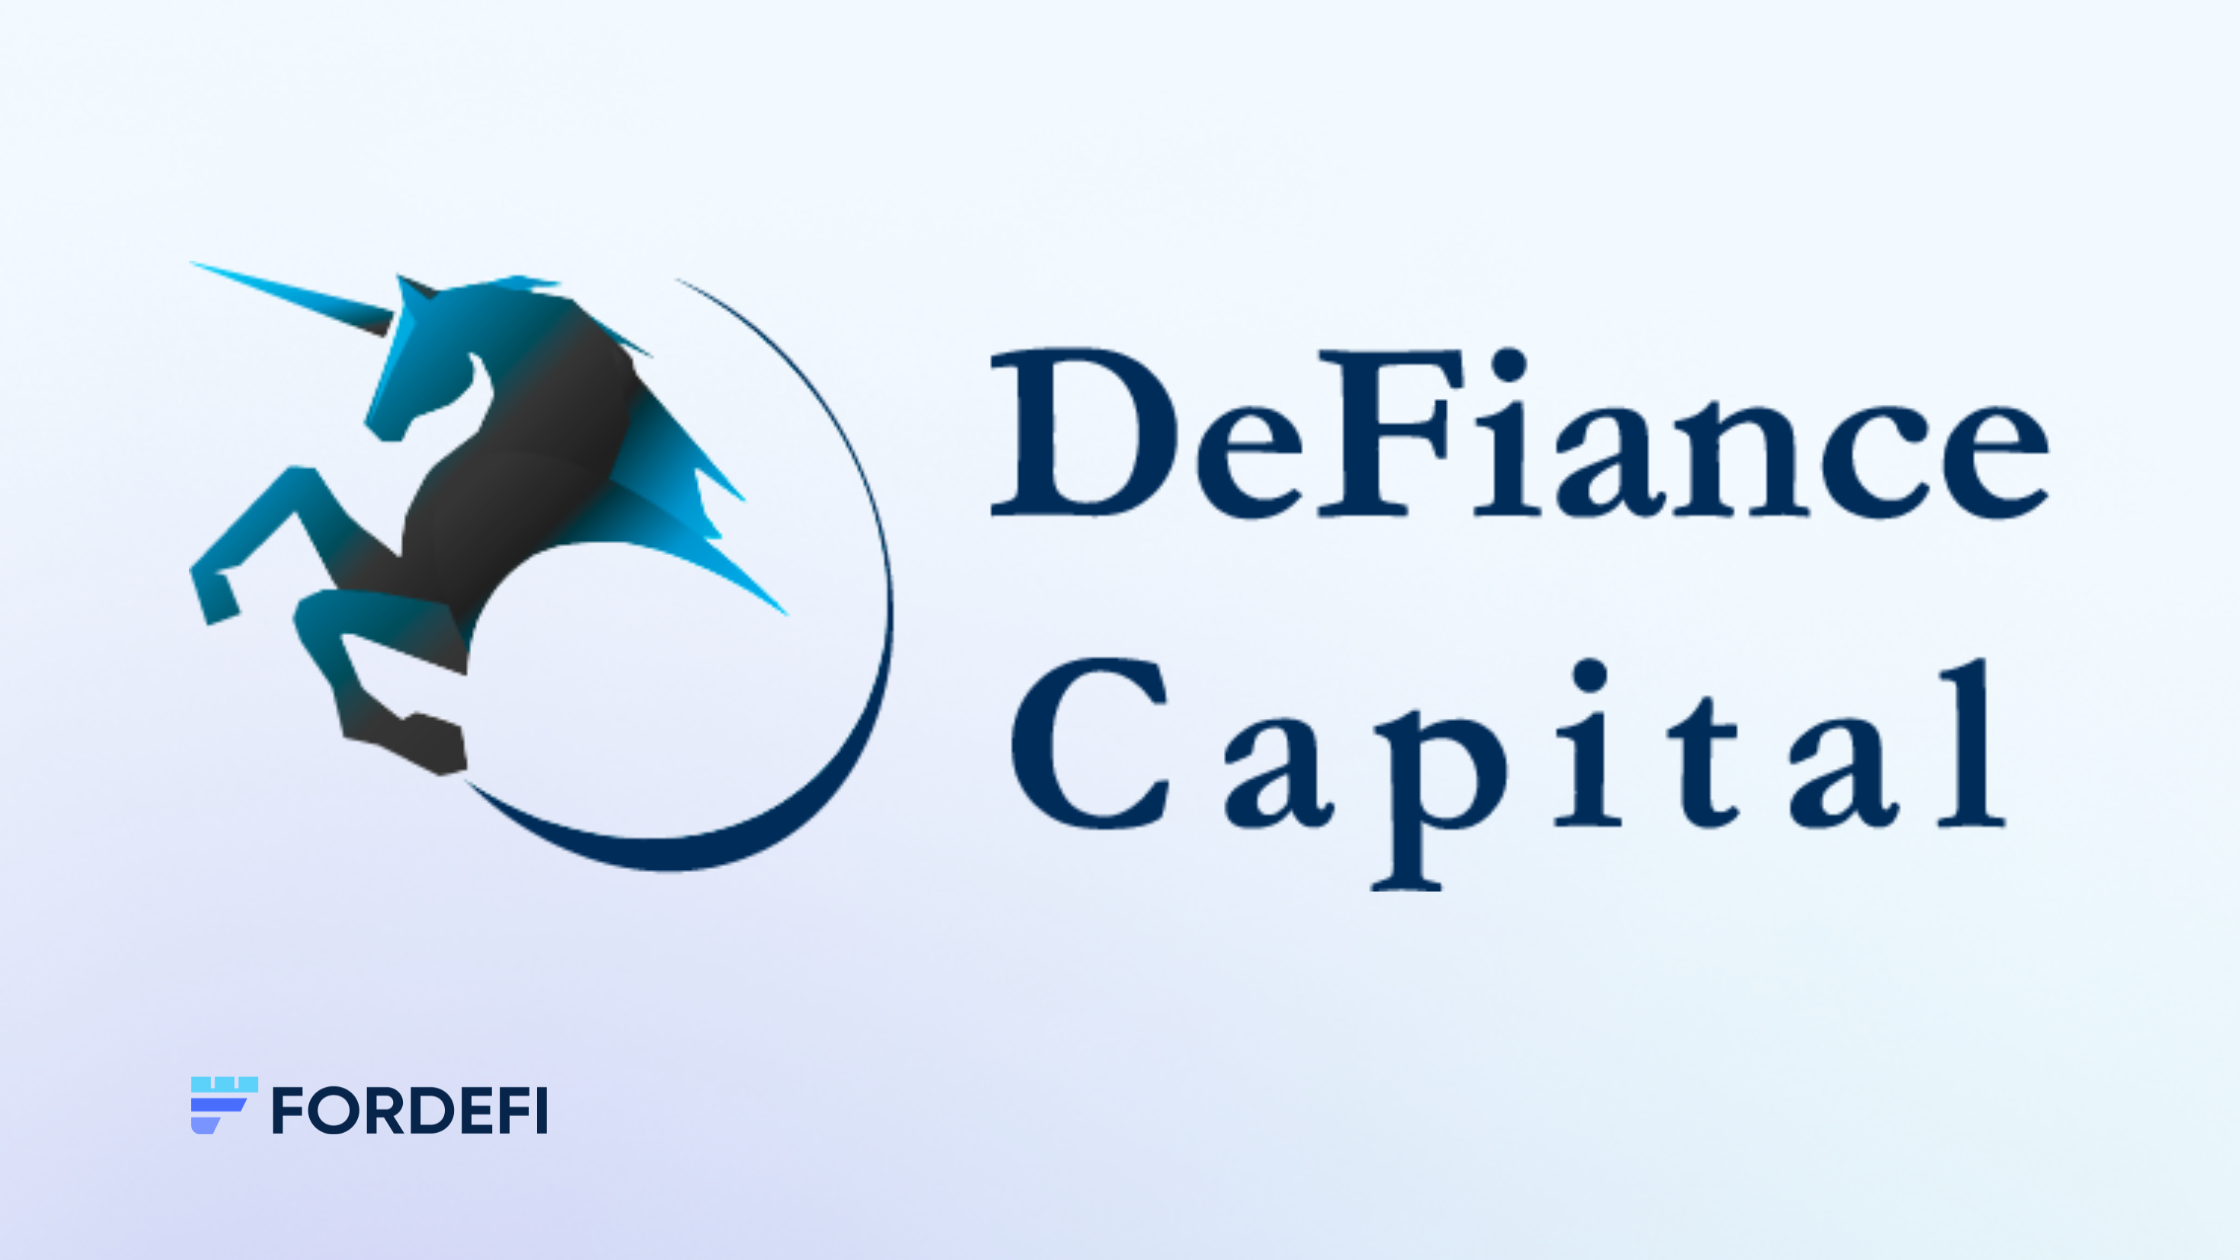 DeFiance Capital